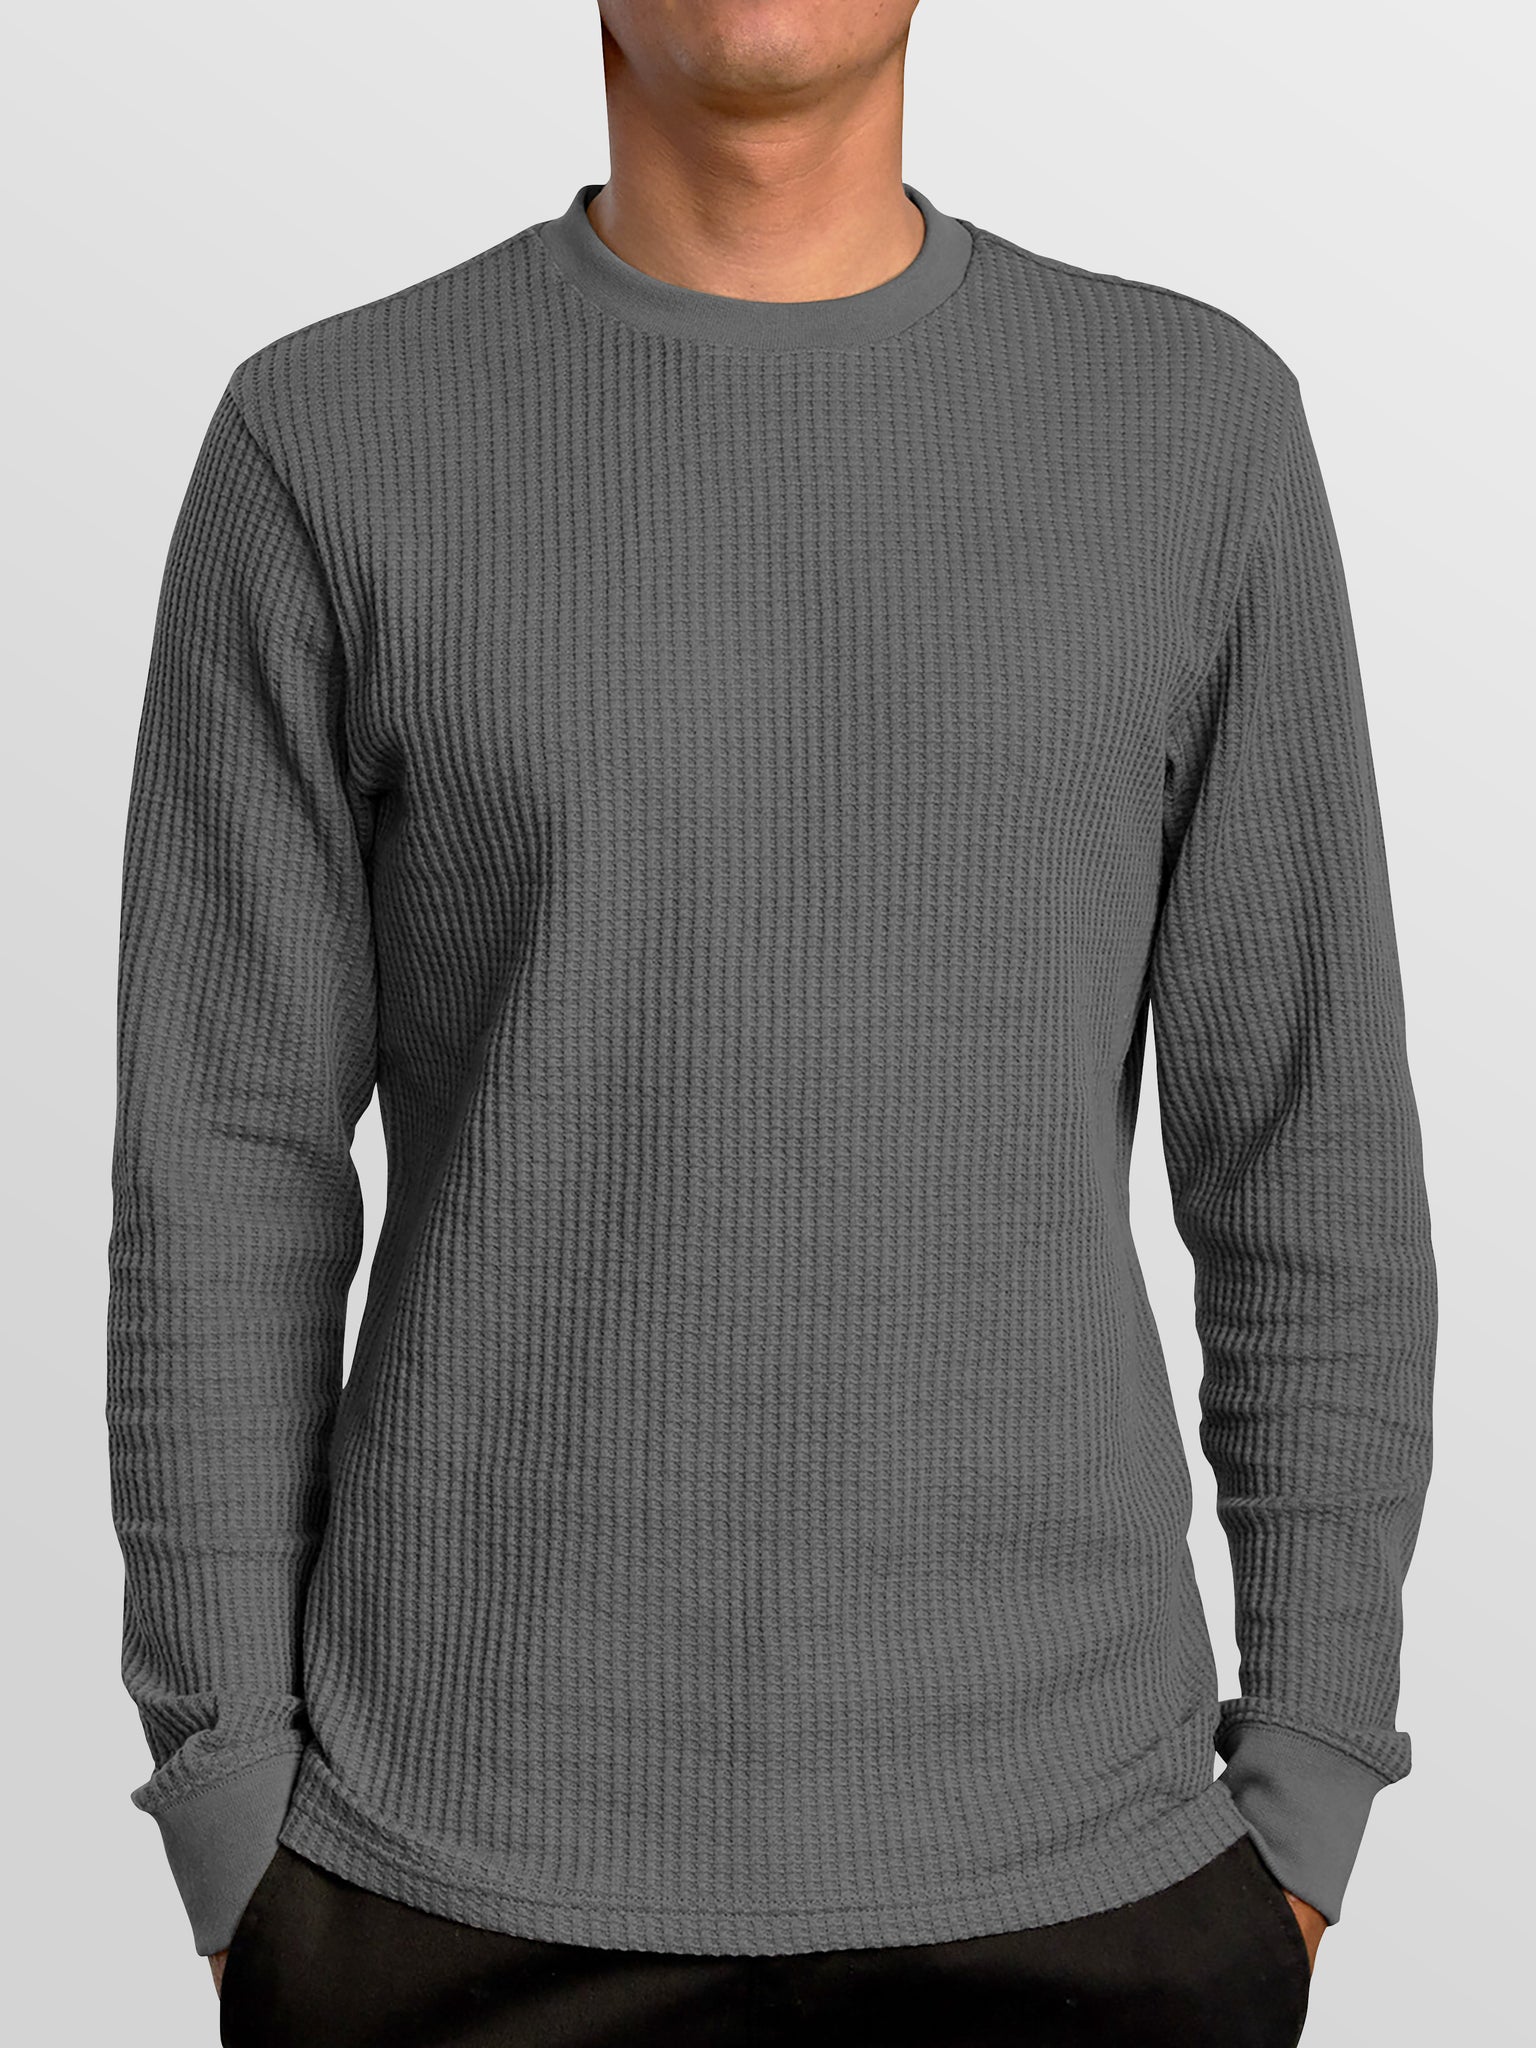 Men's Waffle Thermal Sweatshirts